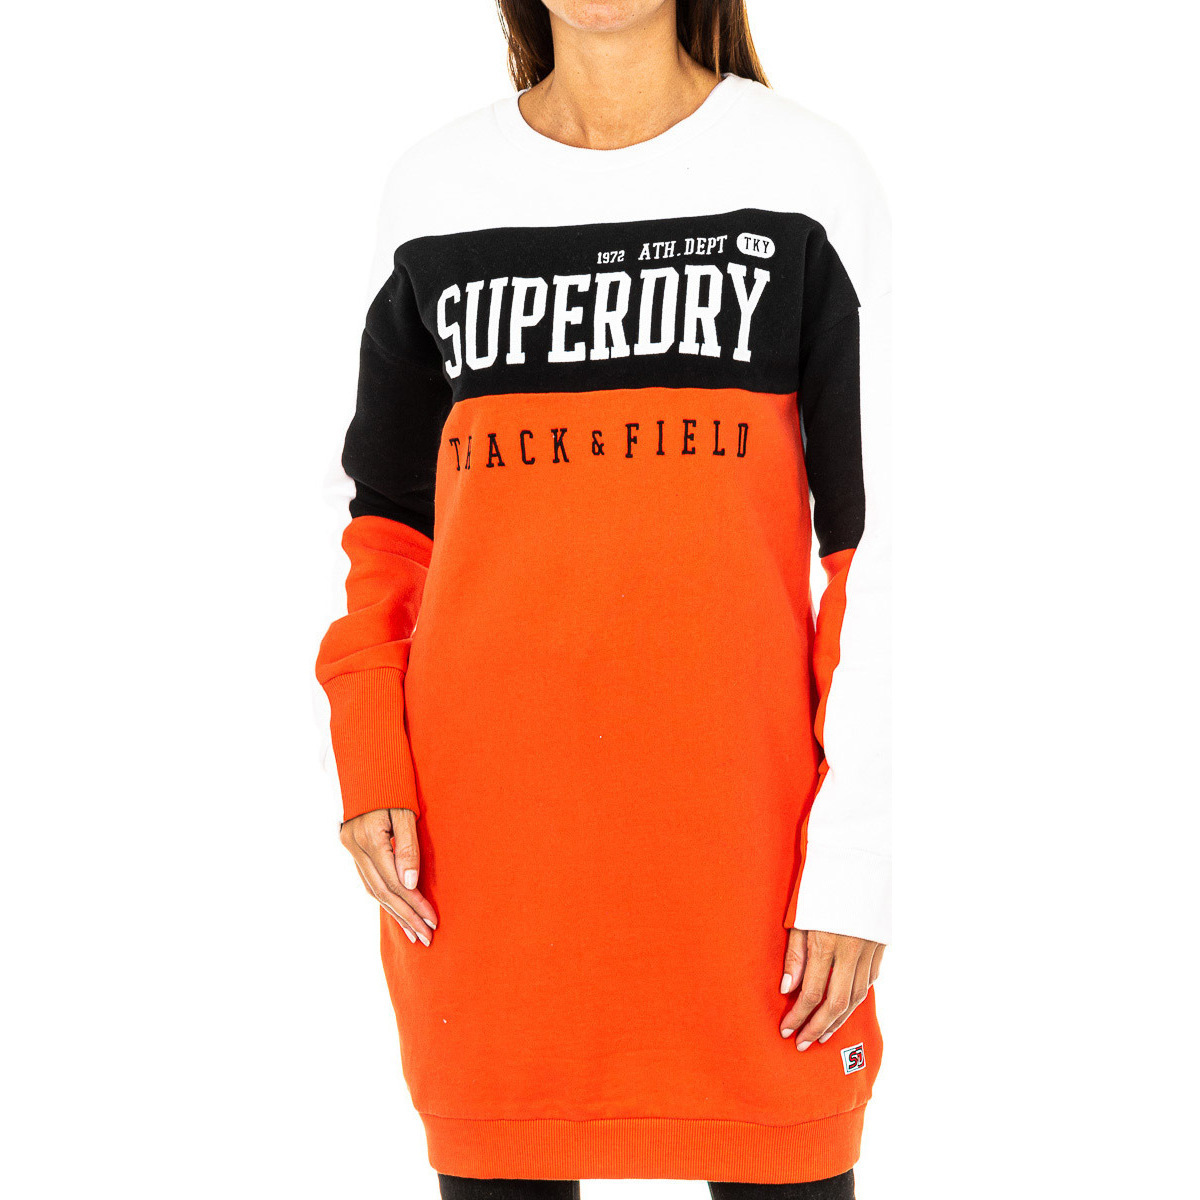 Textil Ženy Mikiny Superdry W8000020A-OIR           